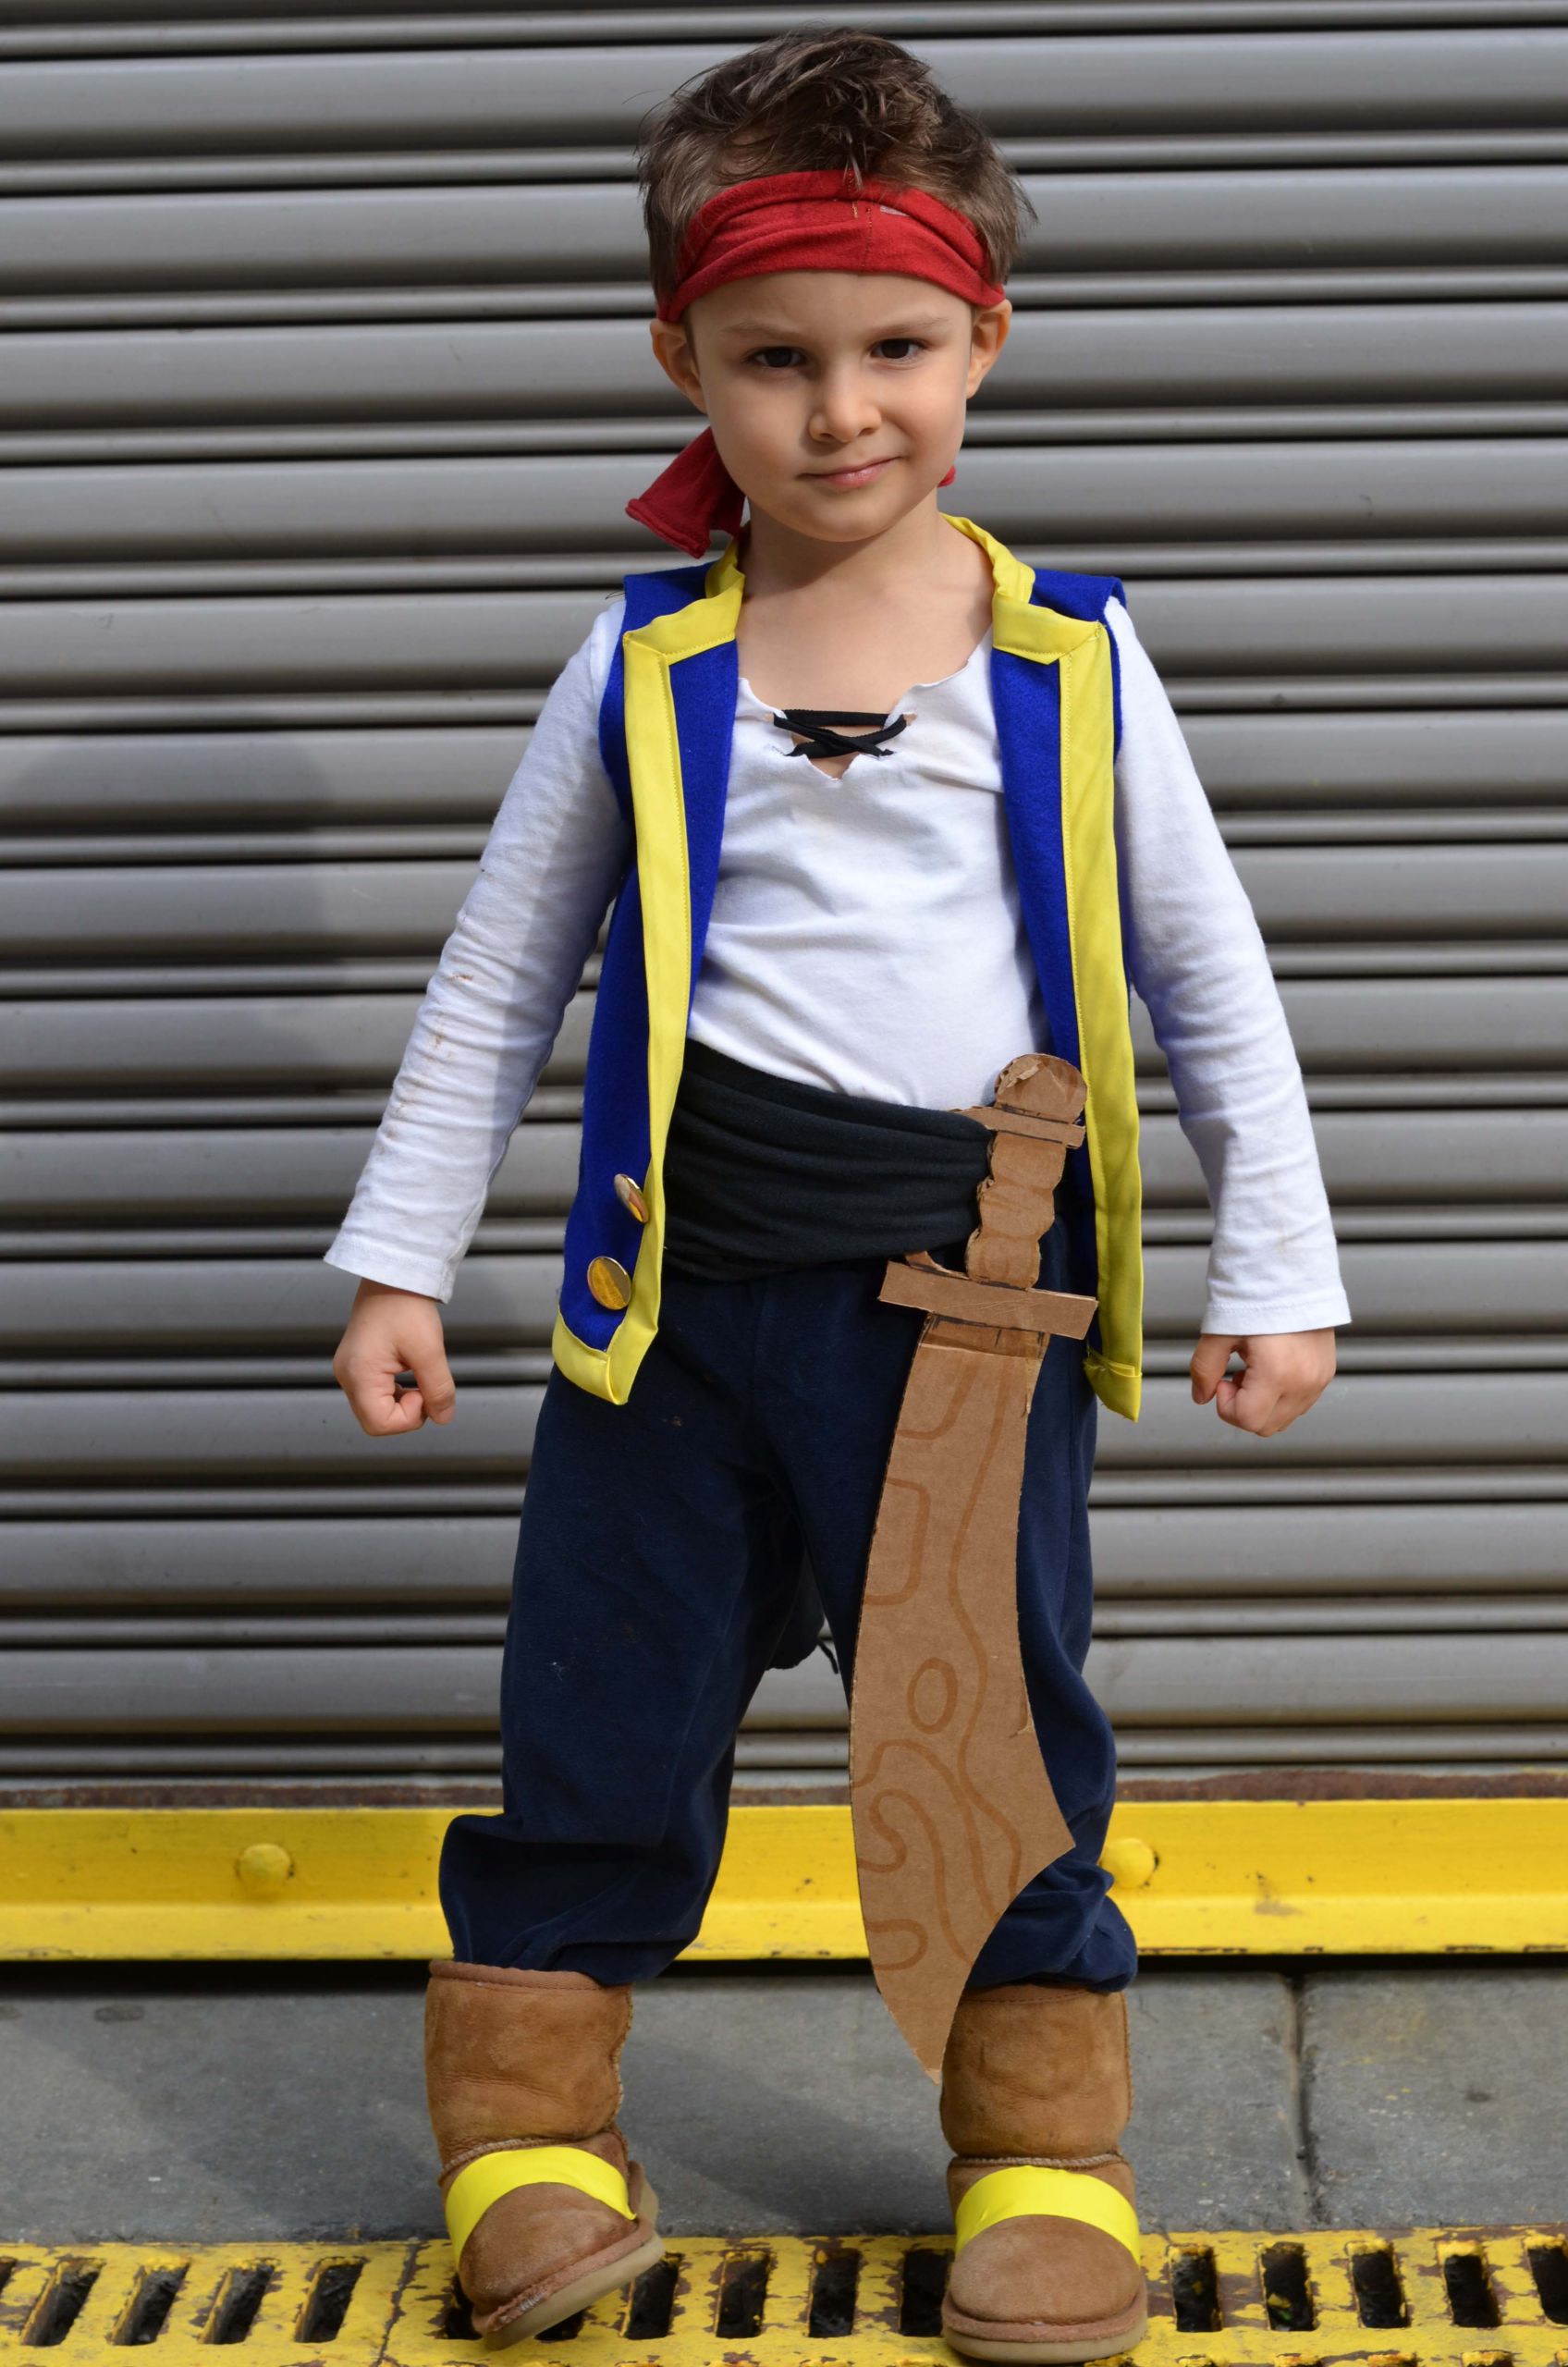 DIY Pirate Costume Kids
 DIY Halloween Costumes for Kids